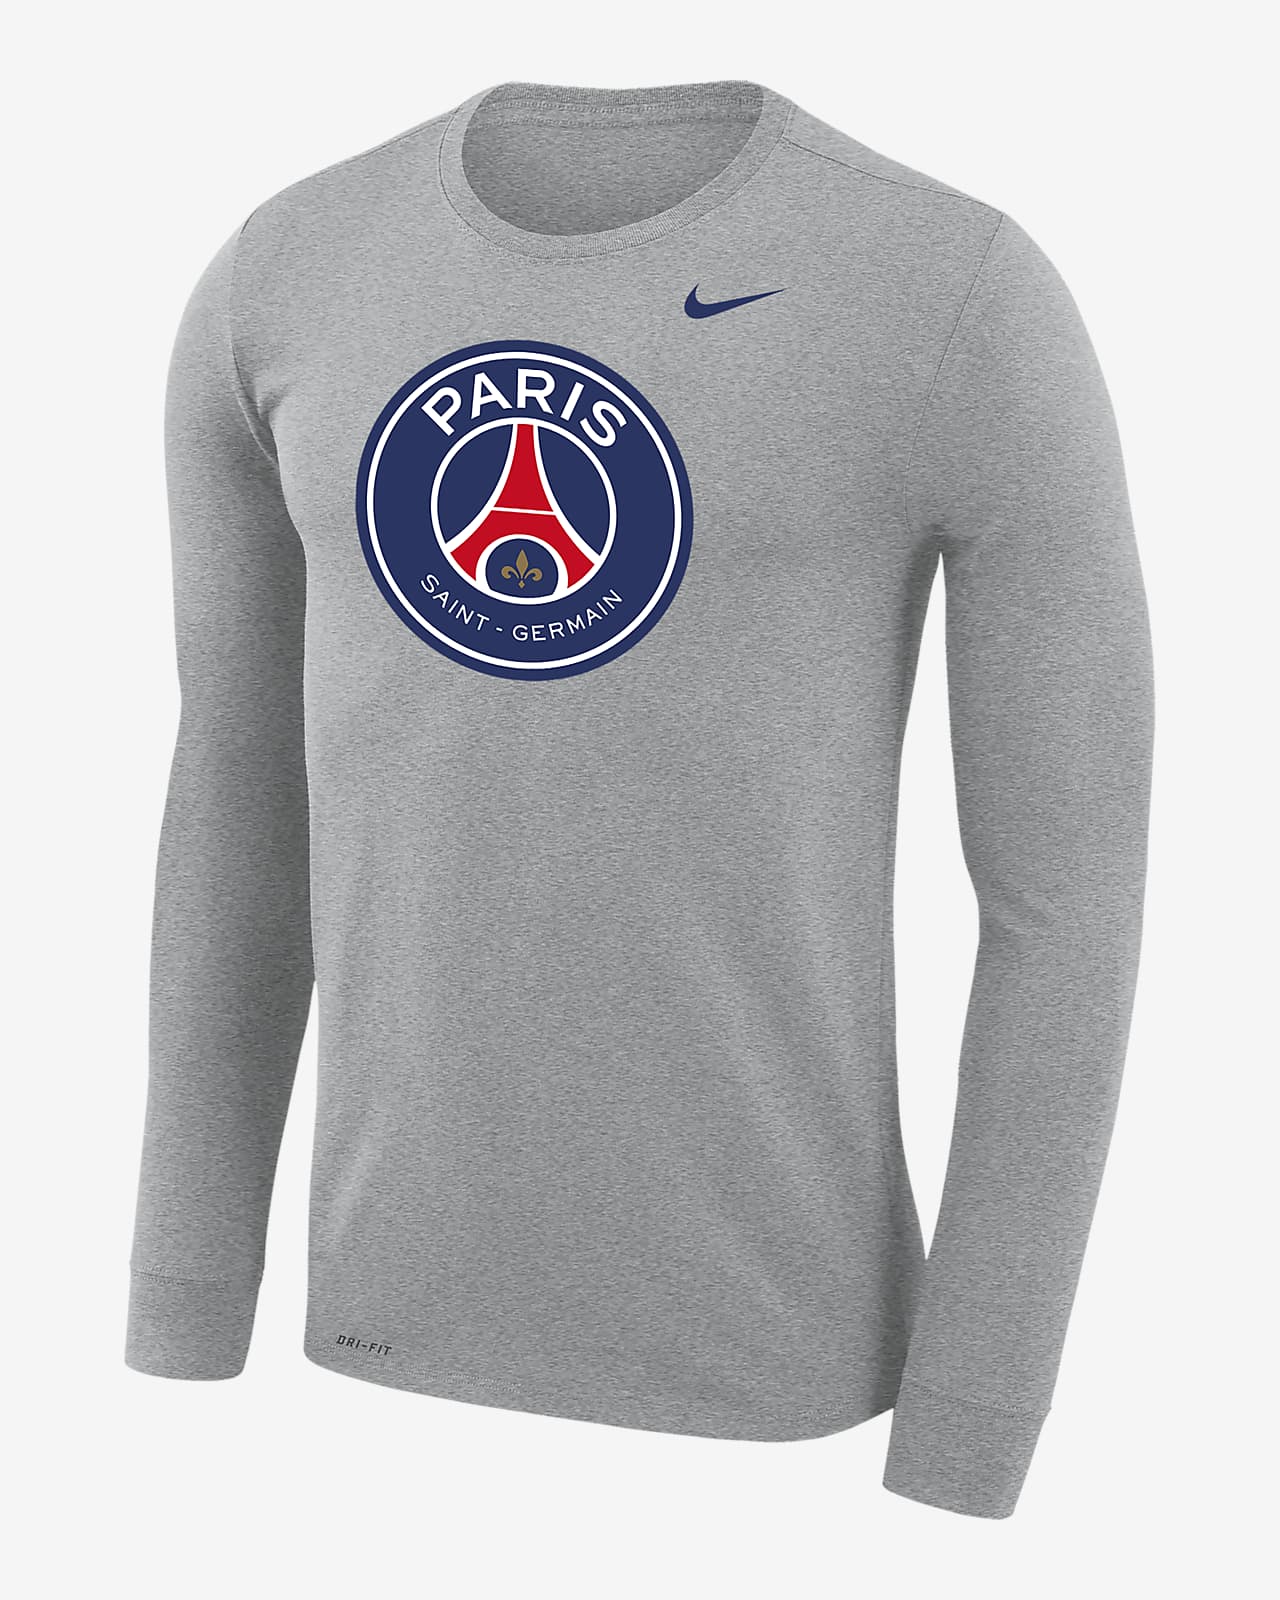 Paris Saint-Germain Legend Men's Nike Dri-FIT Long-Sleeve T-Shirt